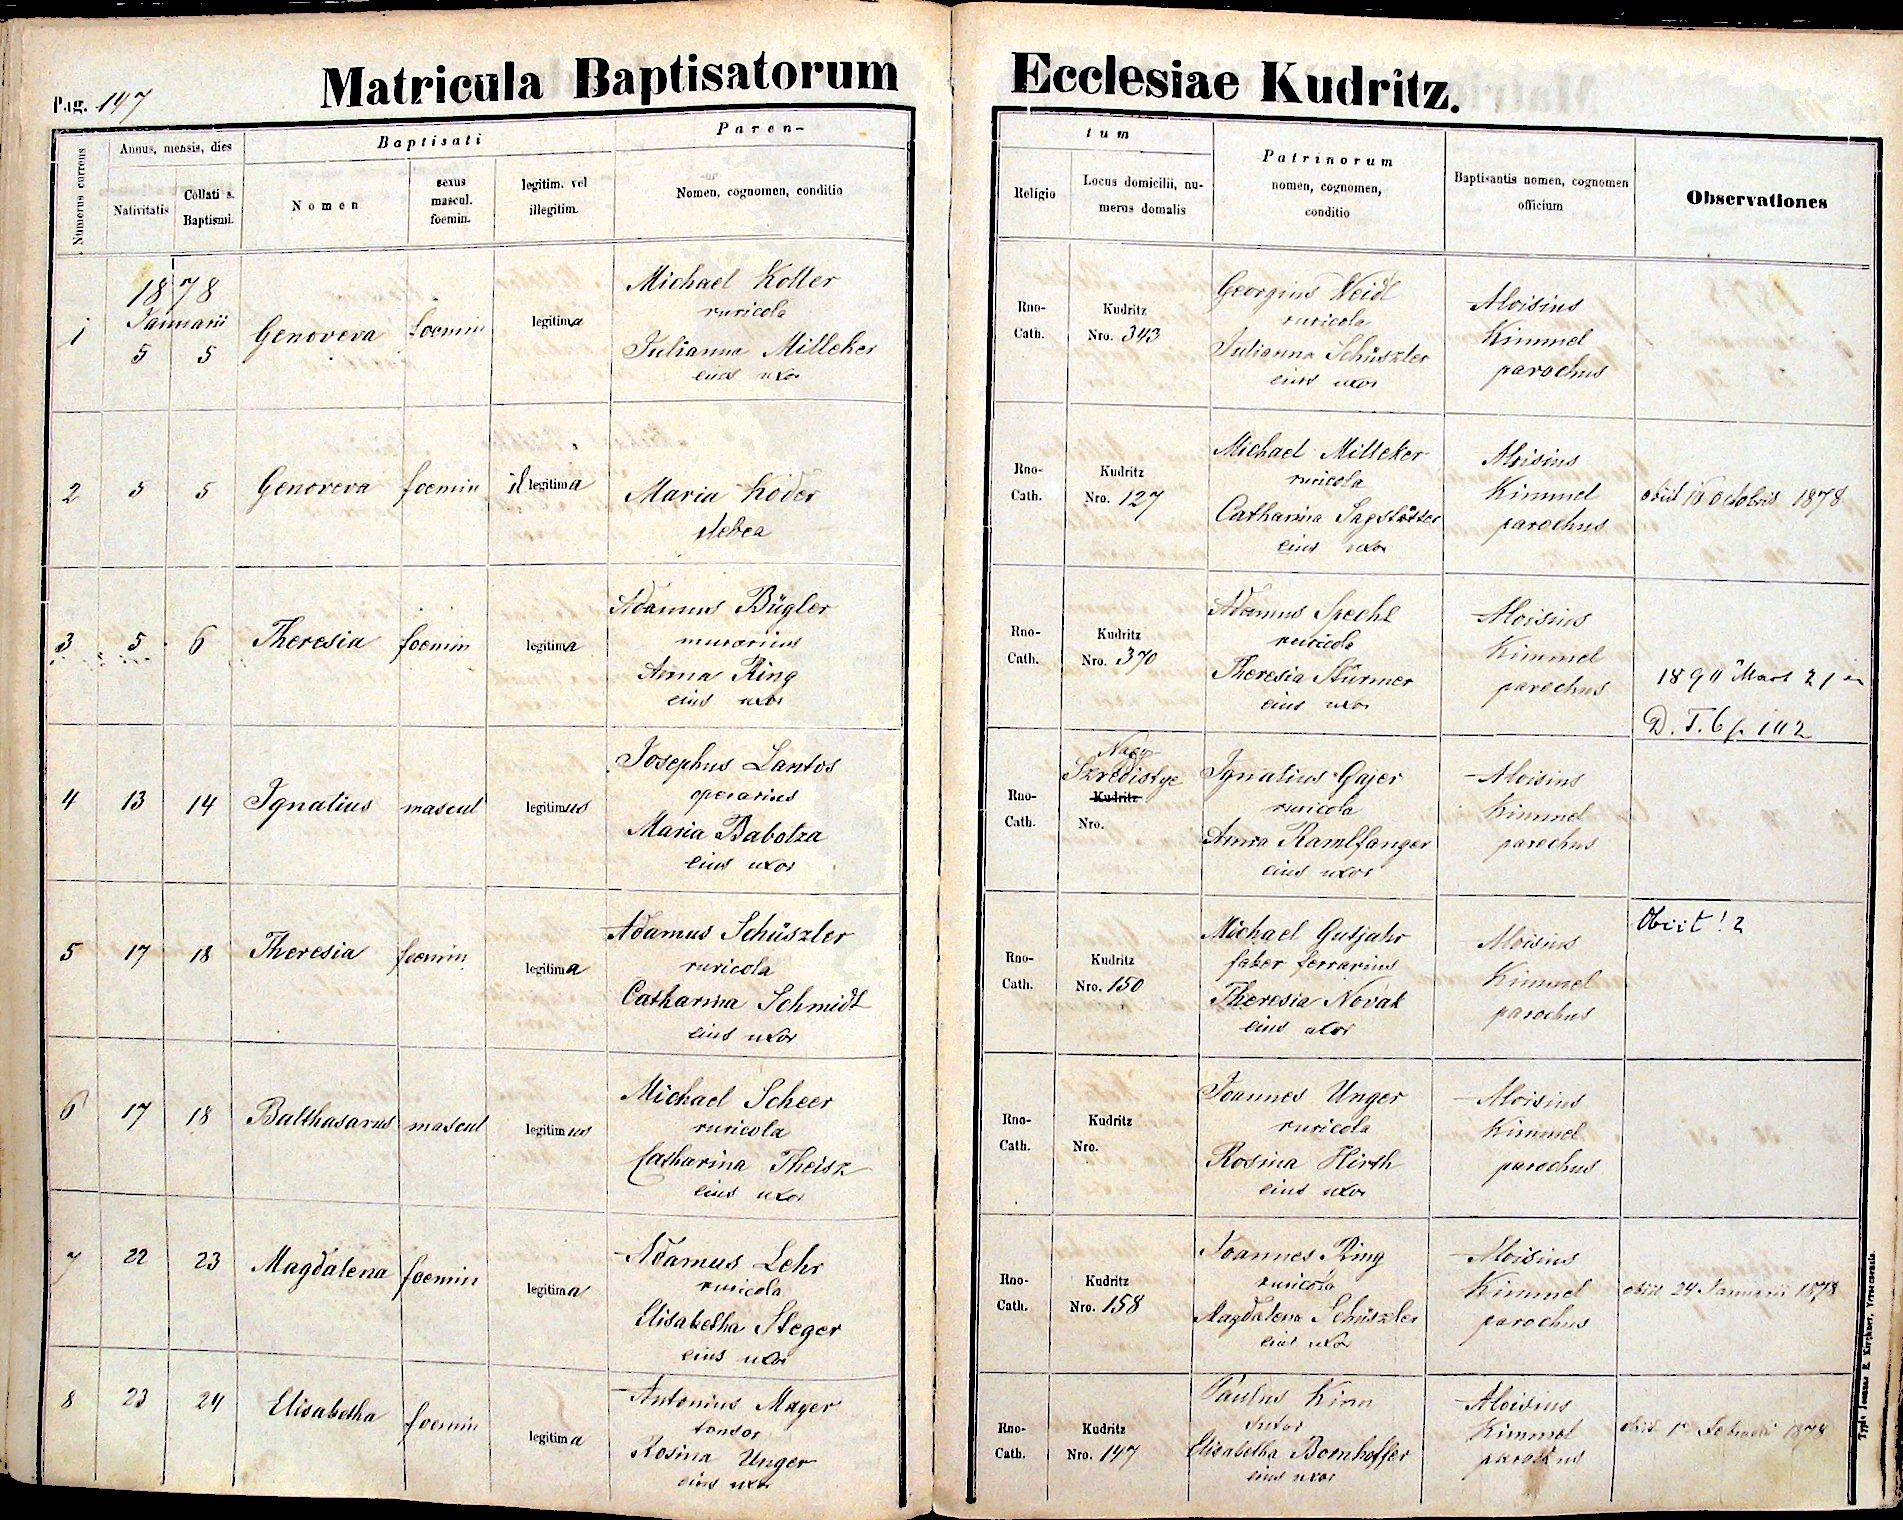 images/church_records/BIRTHS/1870-1879B/1878/147